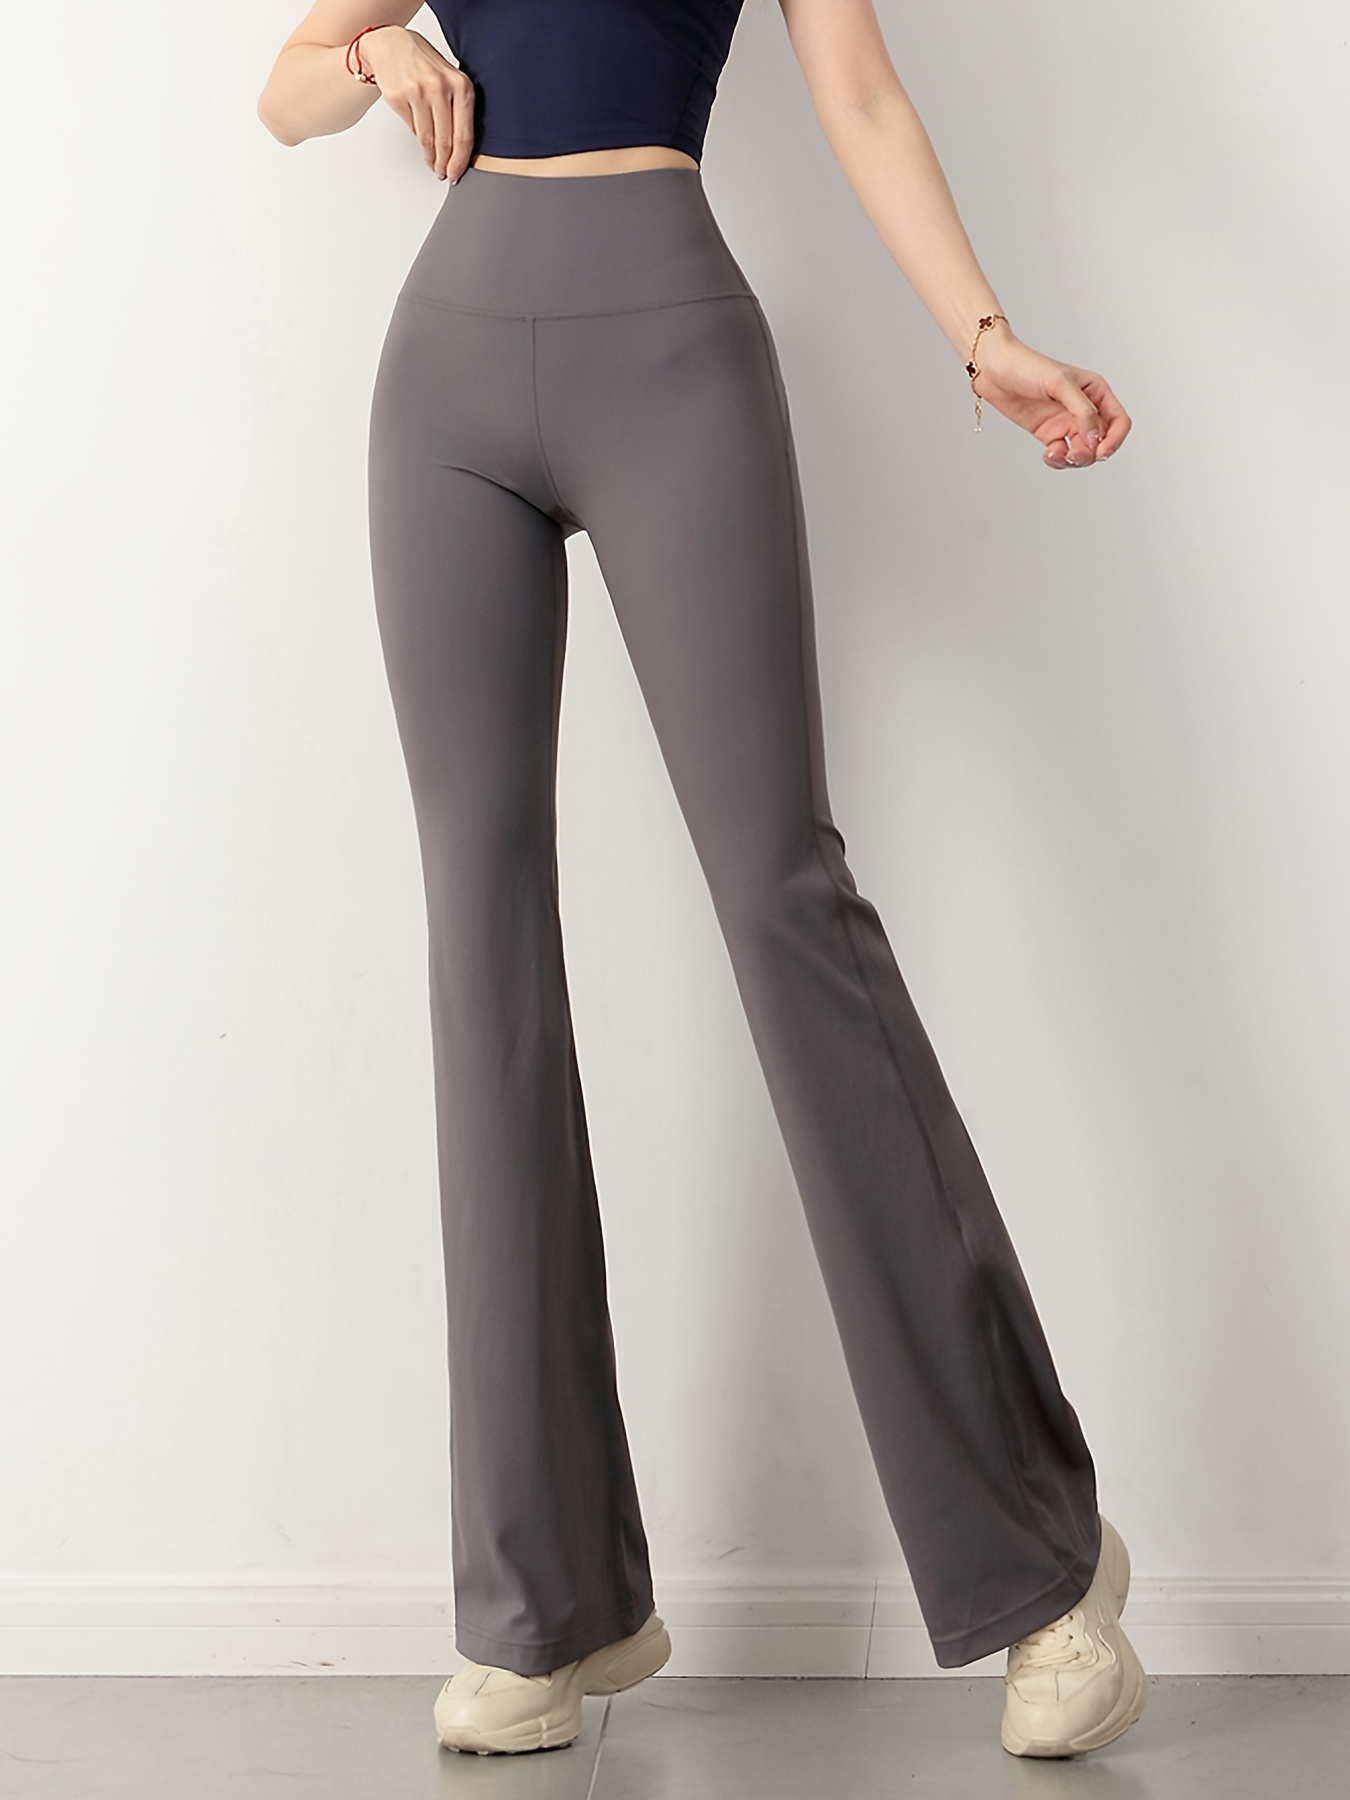 nsendm Unisex Pants Adult Yoga Pants for Women High Waist Pack